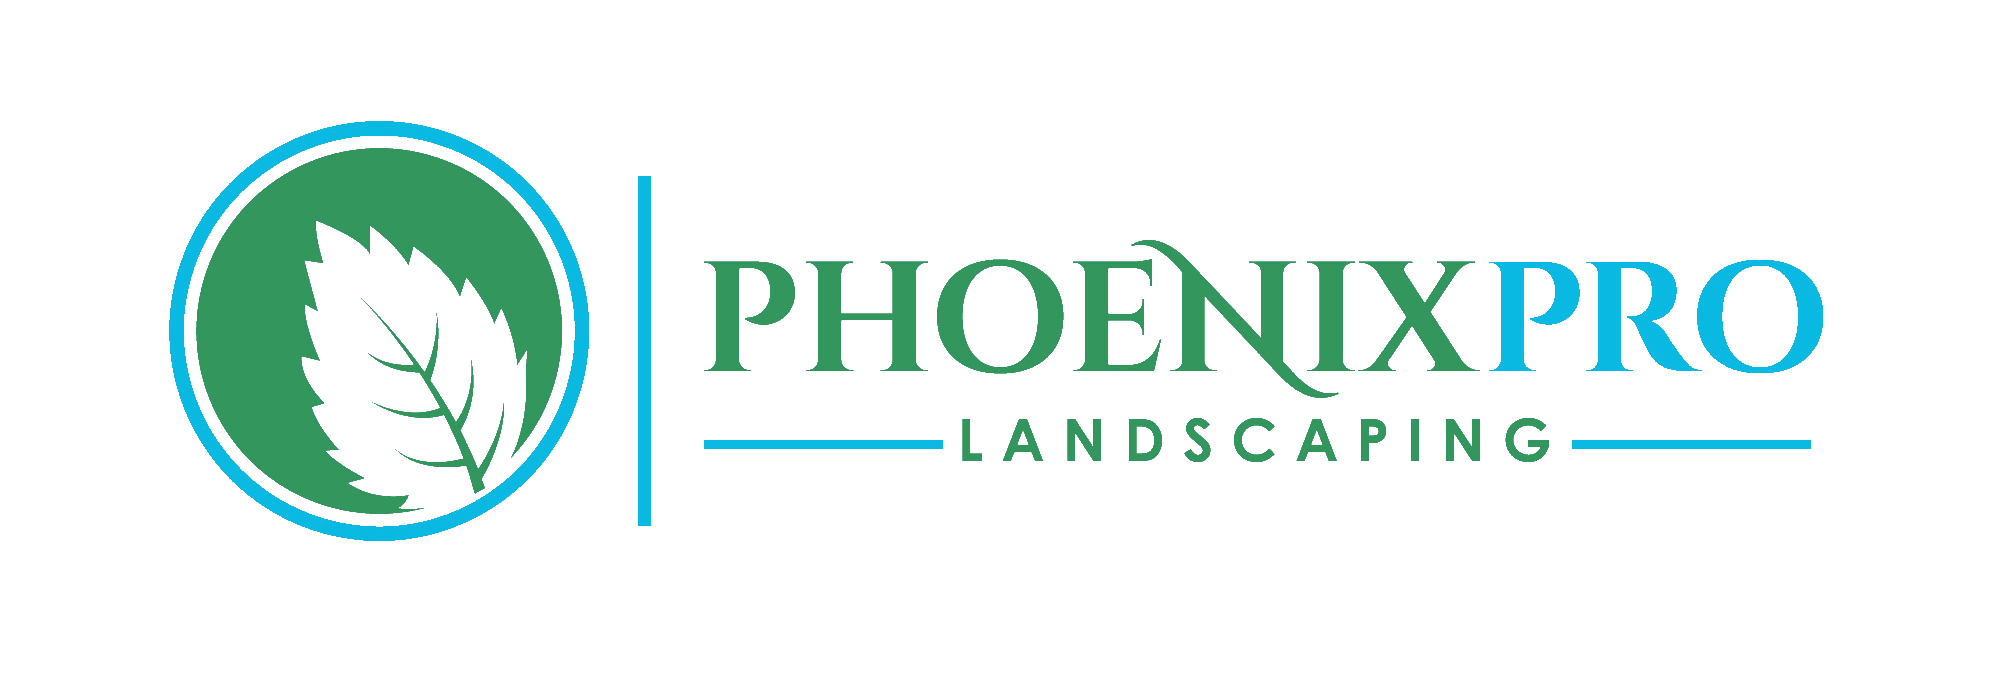 Phx Pro Landscaping, Professional Landscaping Services Phoenix Az